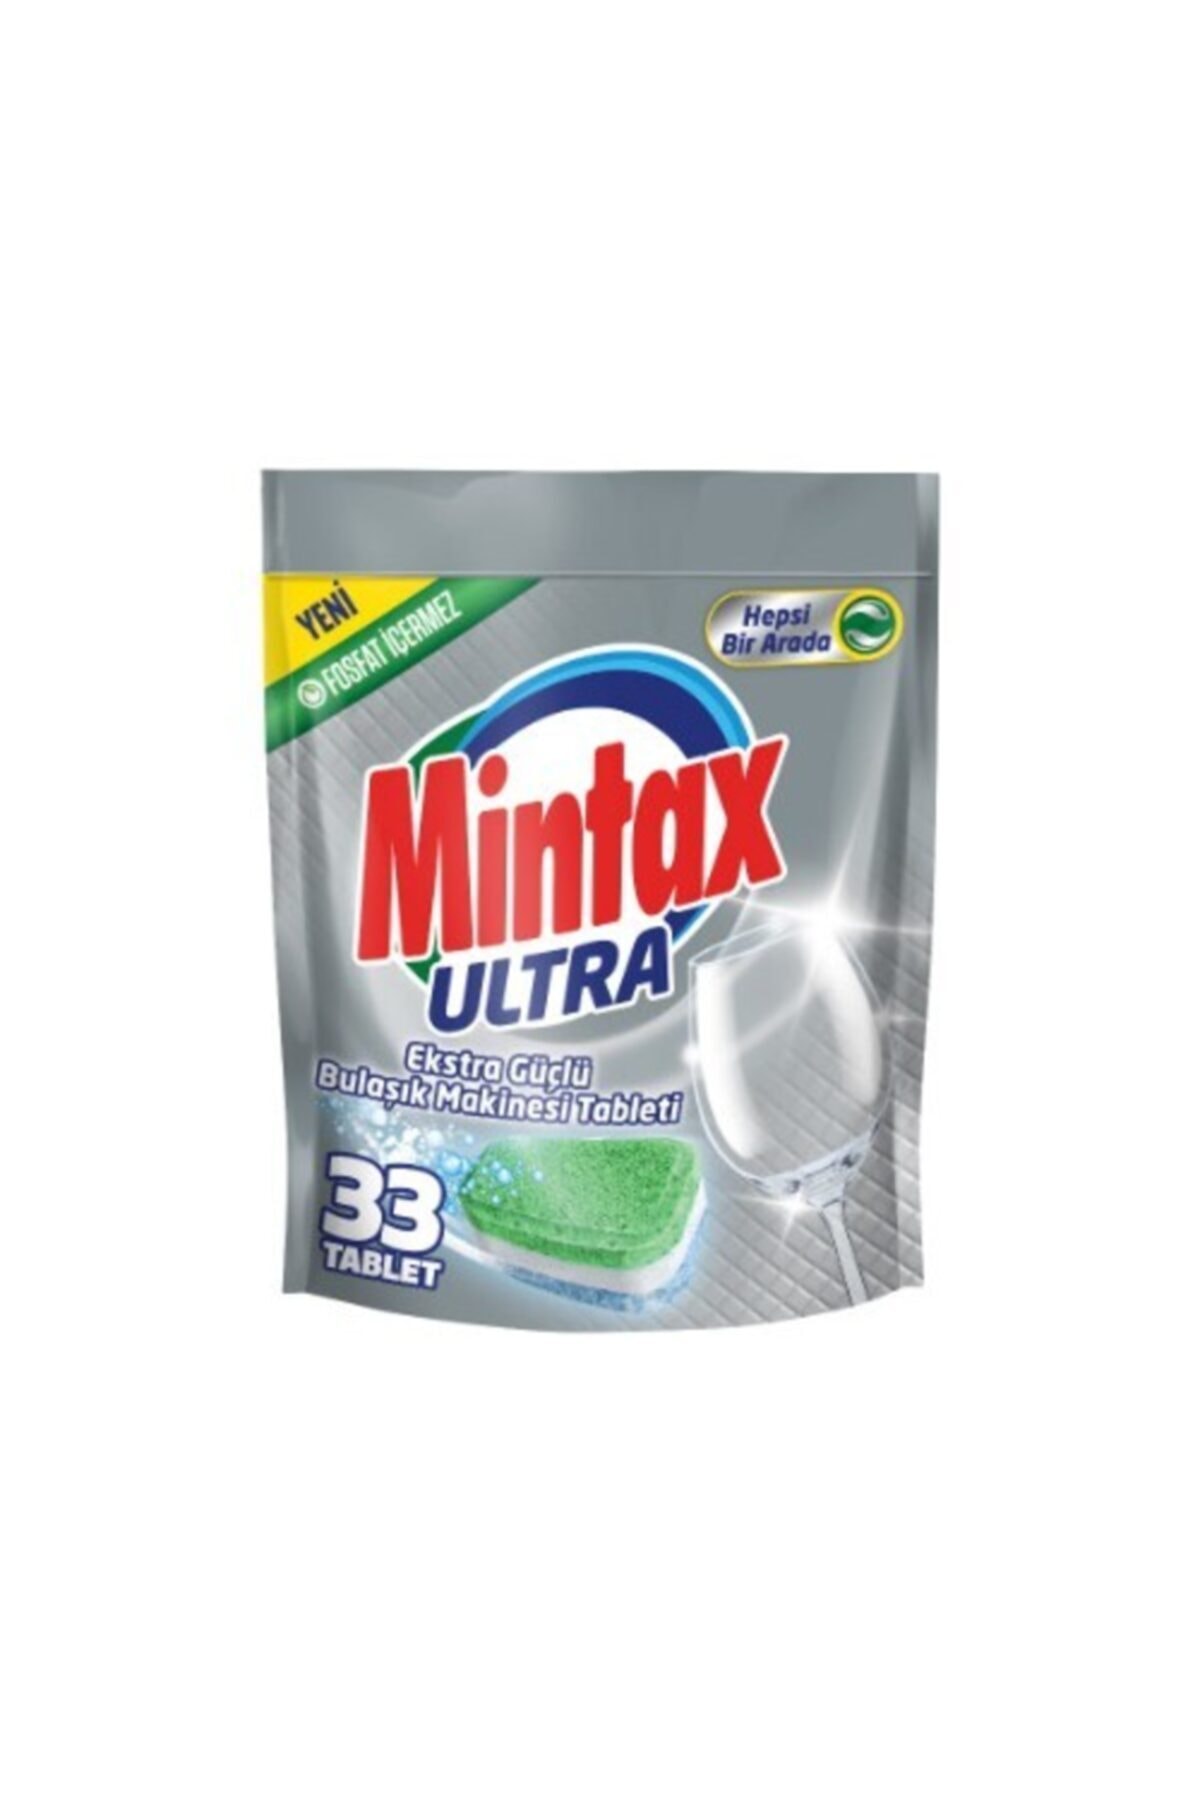 Mintax Ultra Bulaşık Makinesi Tableti 33 Adet